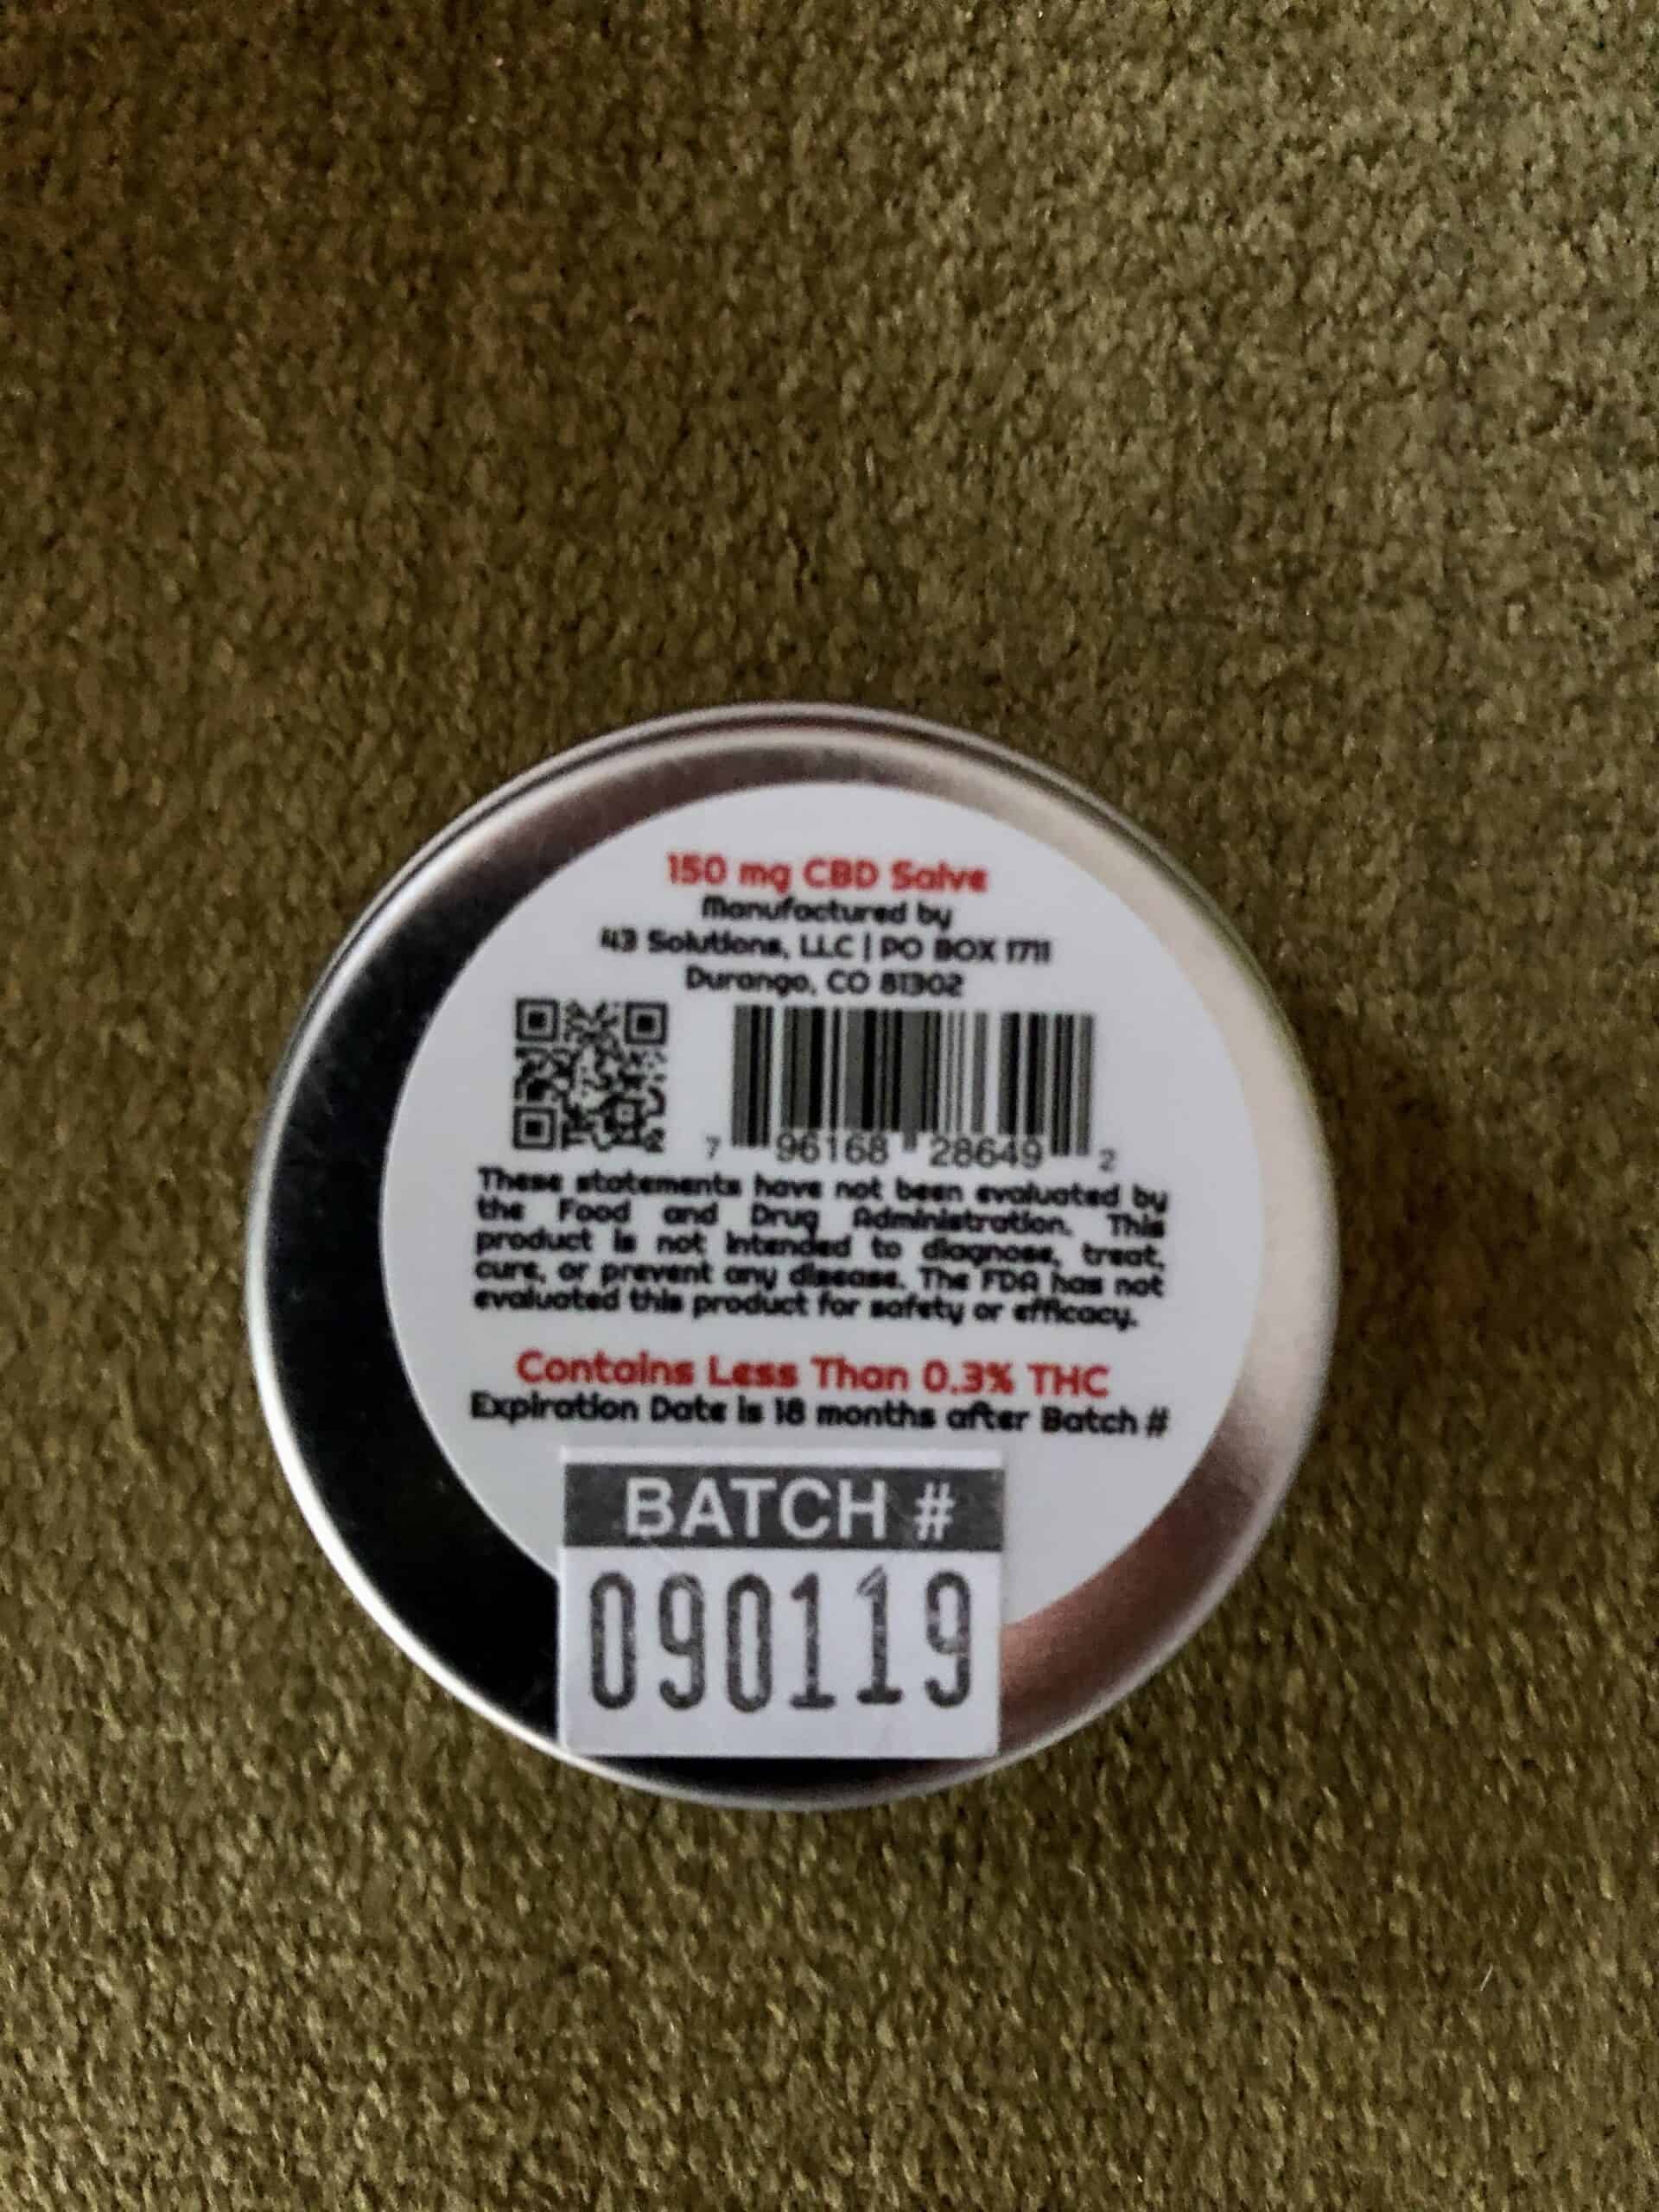 43 CBD Pocket Tin Hemp Oil Salve 150 Mg Save On Cannabis Review Specifications